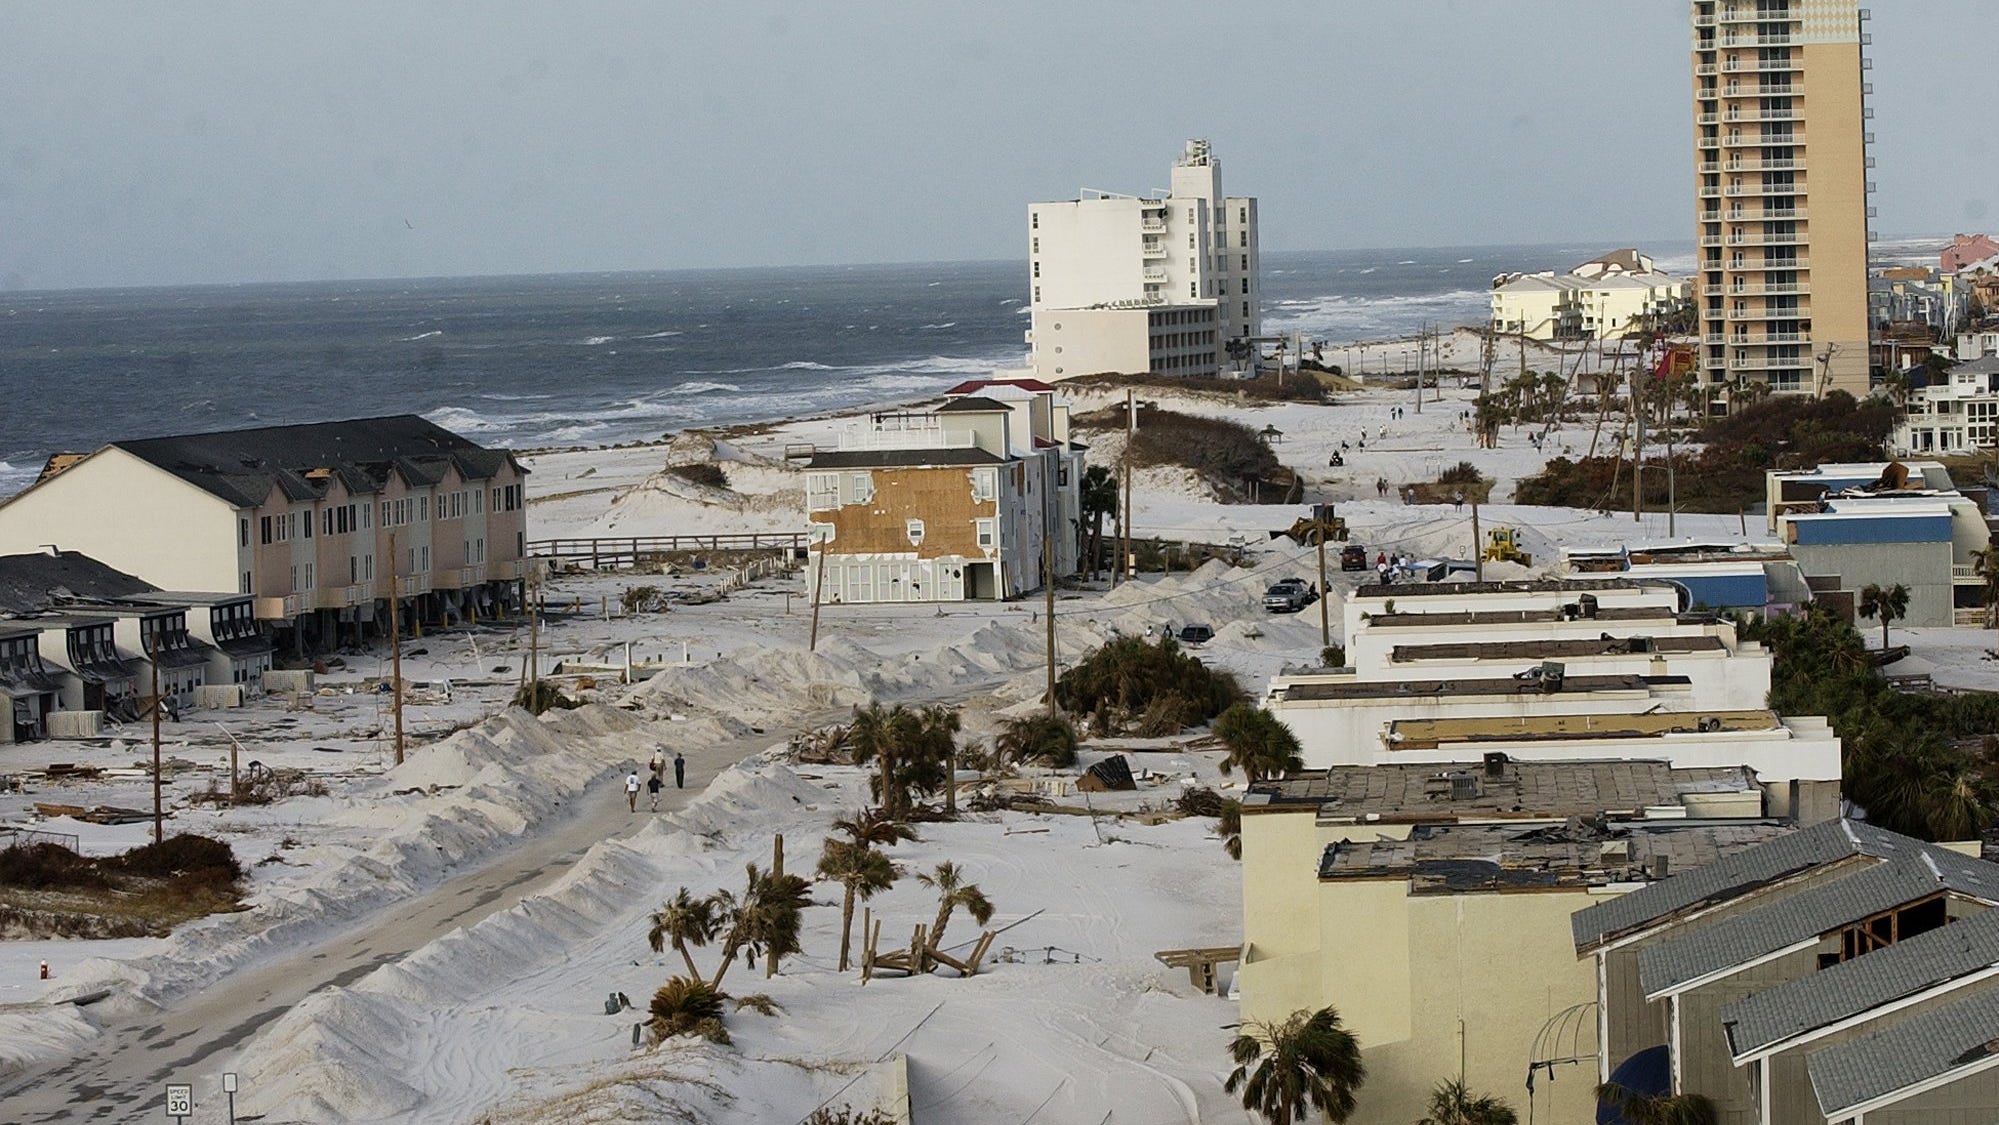 Hurricane Sally Ivan's destruction along Gulf Coast came 16 years ago